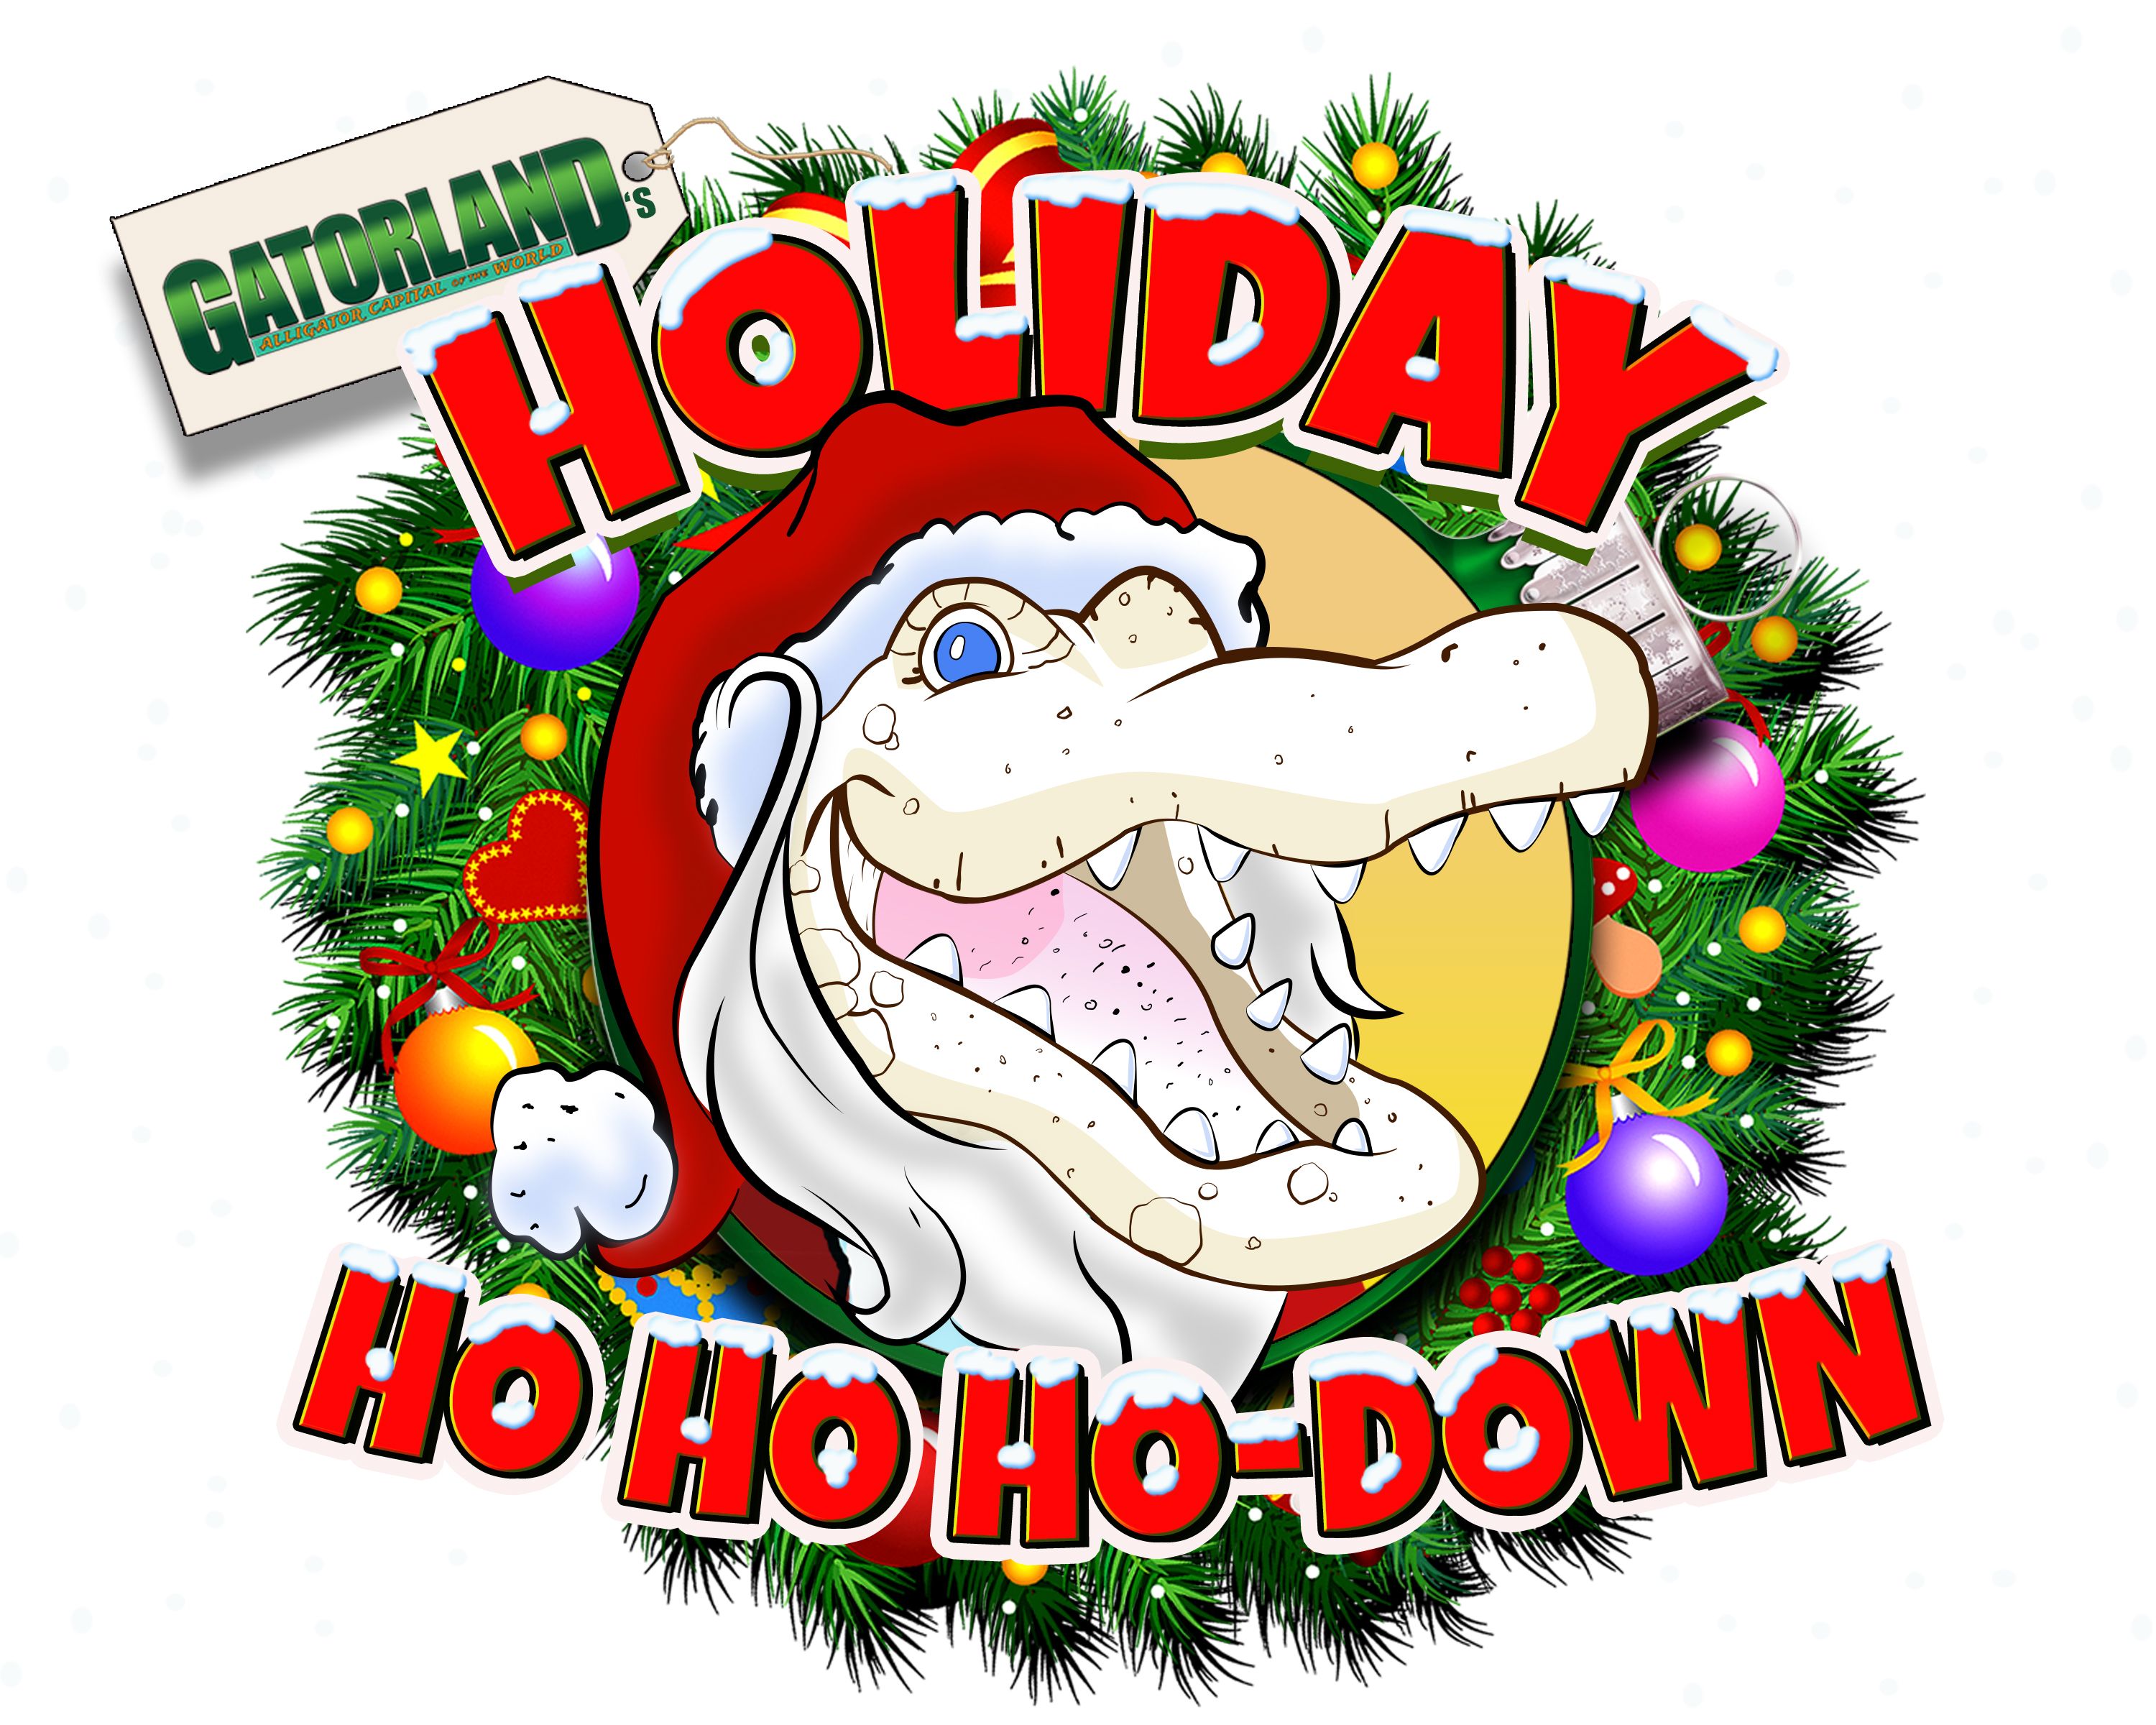 Gatorland's Third Annual Holiday Ho Ho Ho-Down